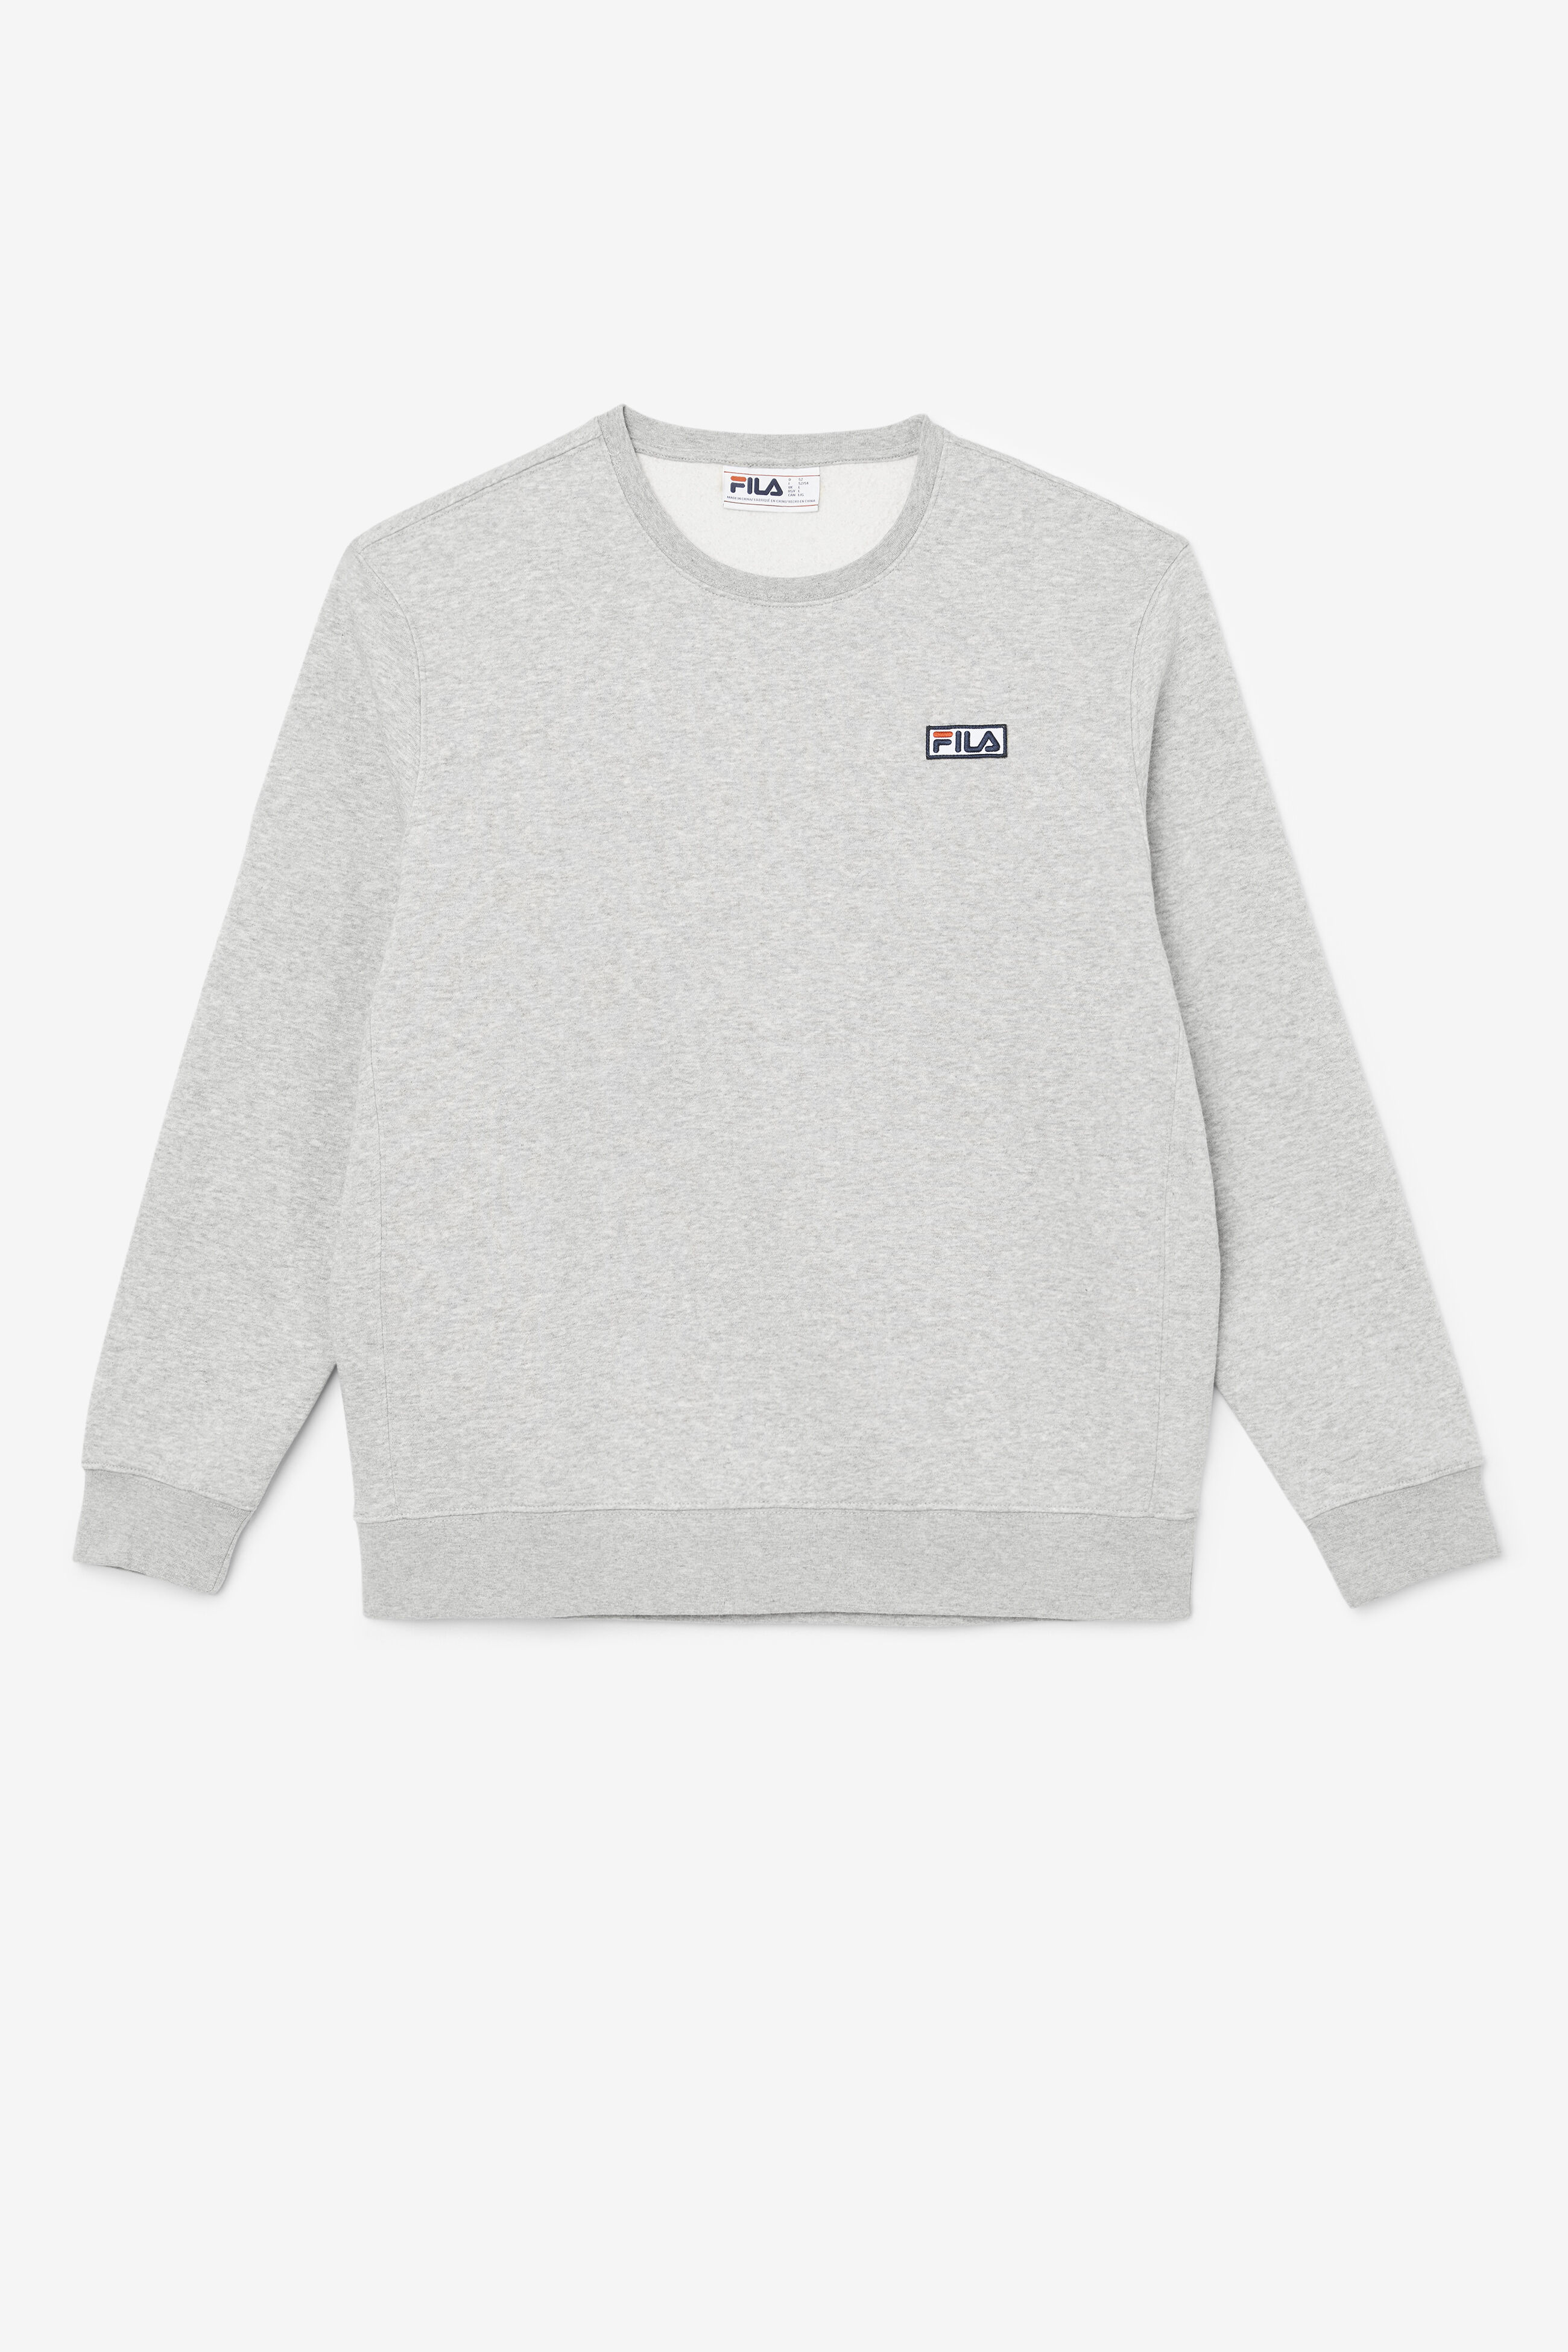 Garran Soft Fleece Crewneck Sweatshirt | Fila 691115900943